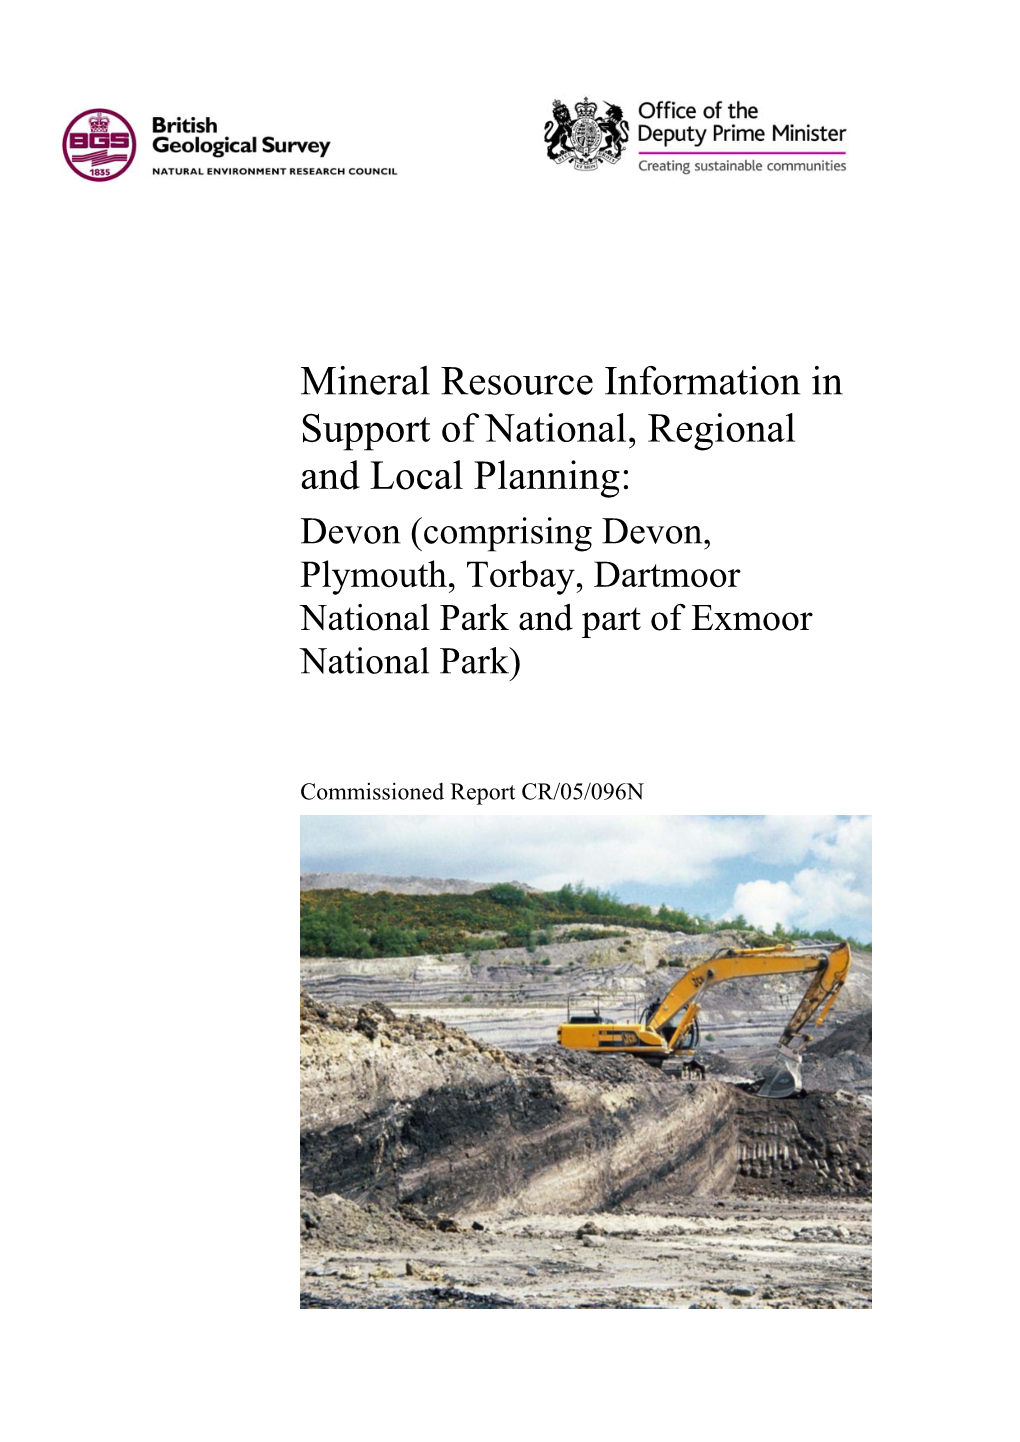 Mineral Resources Report for Devon